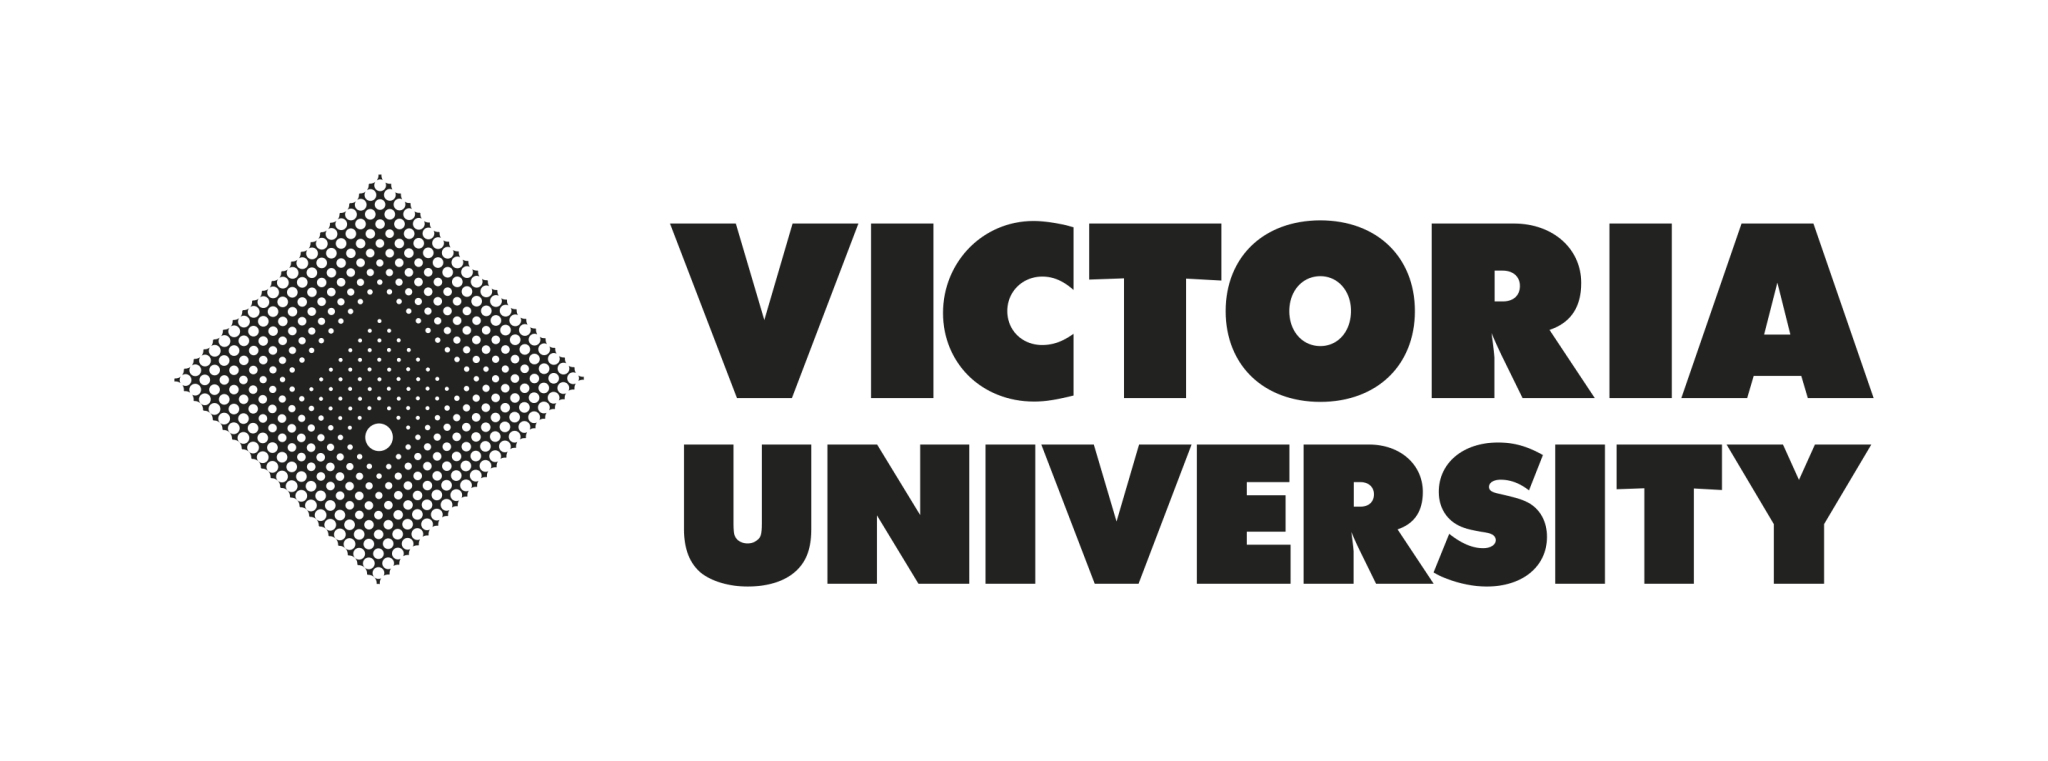 Victoria University – College of Health: